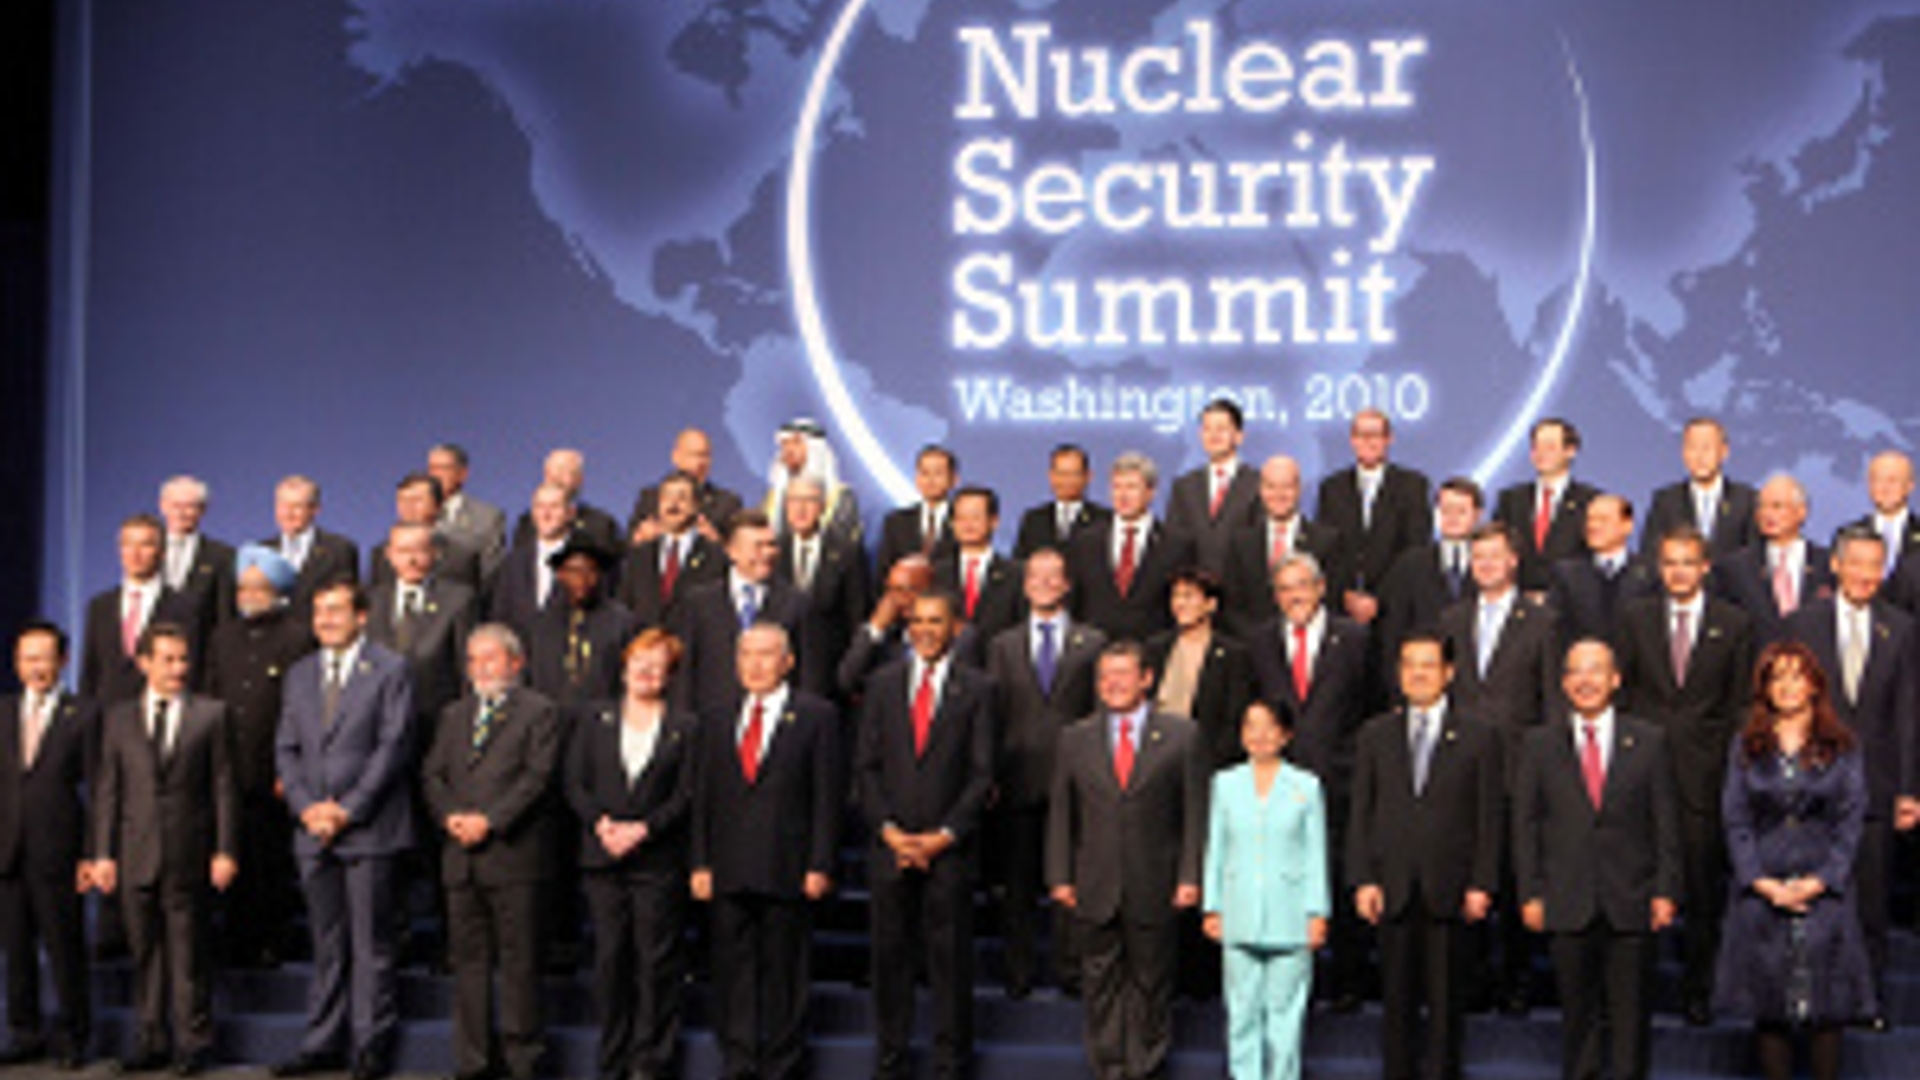 flickr-nucleair-summit-300px.jpg